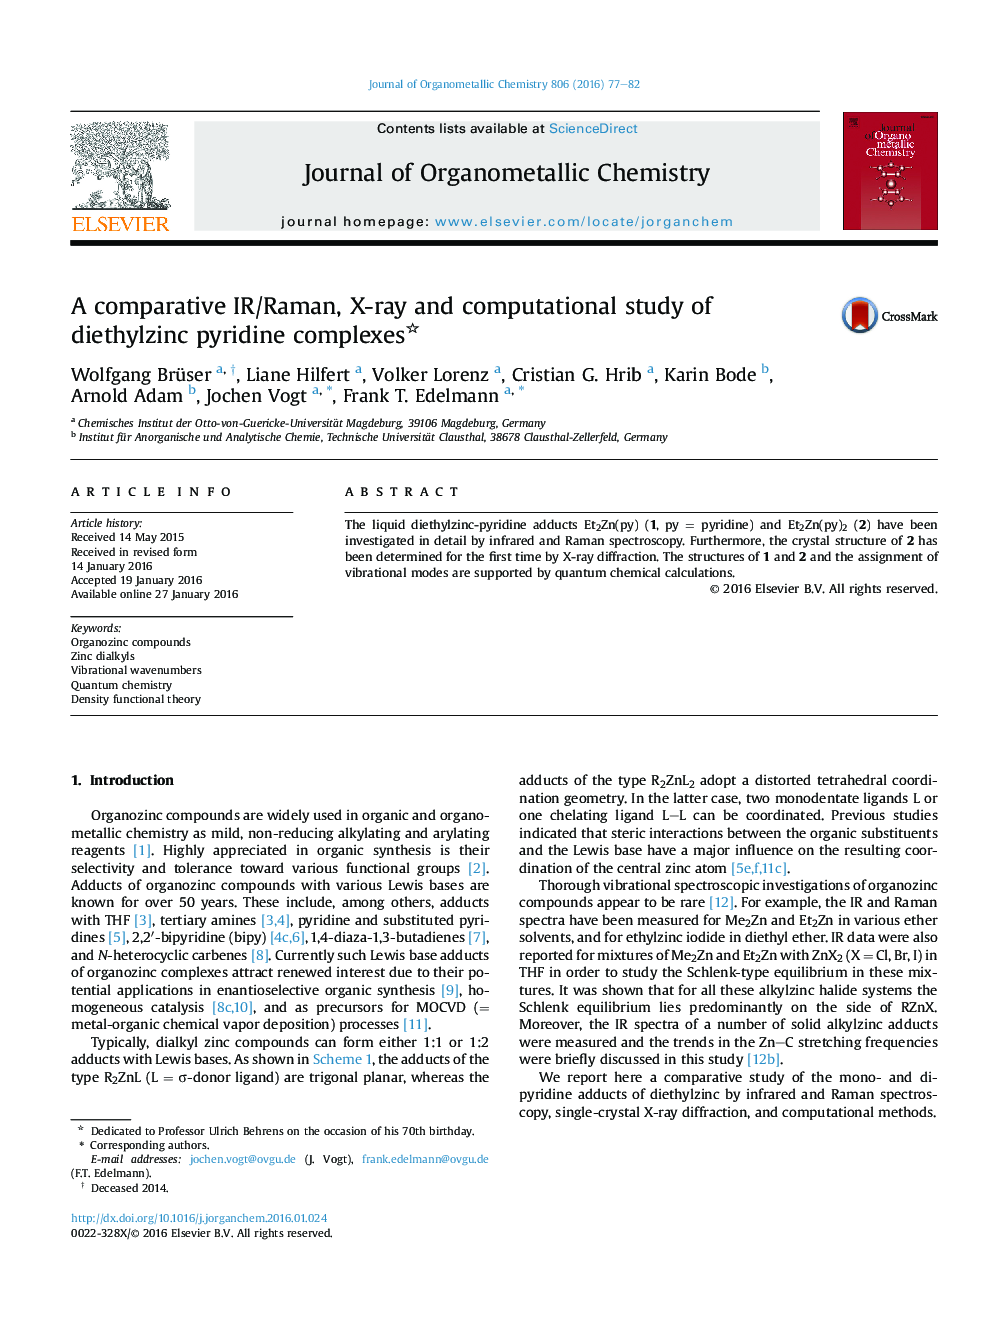 A comparative IR/Raman, X-ray and computational study of diethylzinc pyridine complexes 